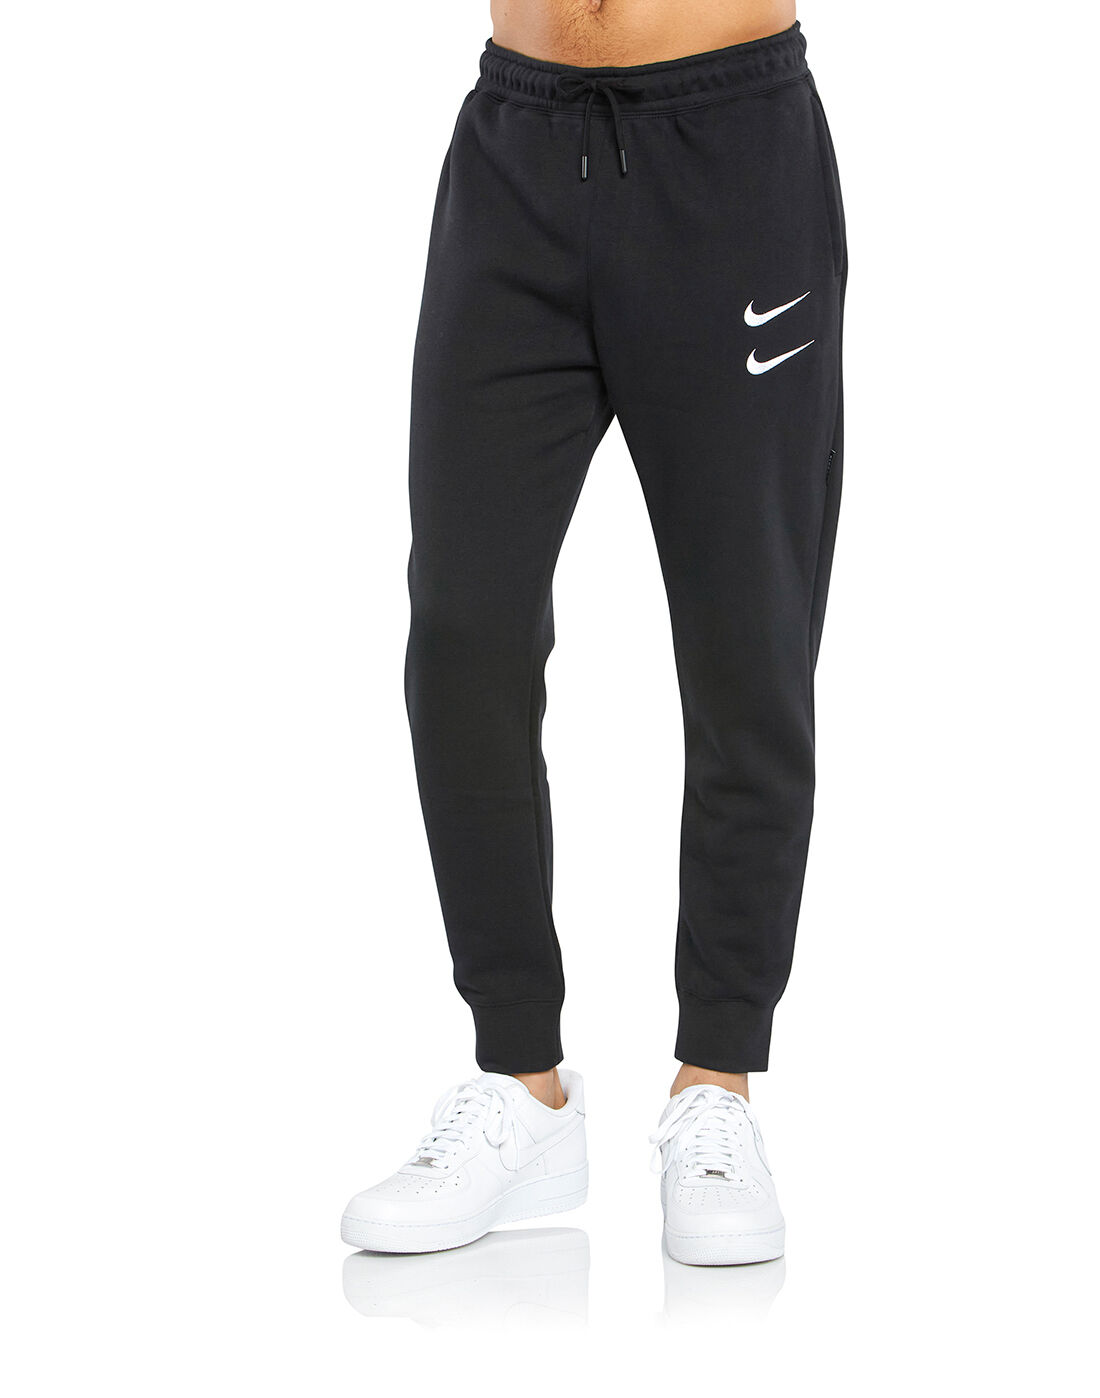 Nike Mens Swoosh Pants - Black | Life 